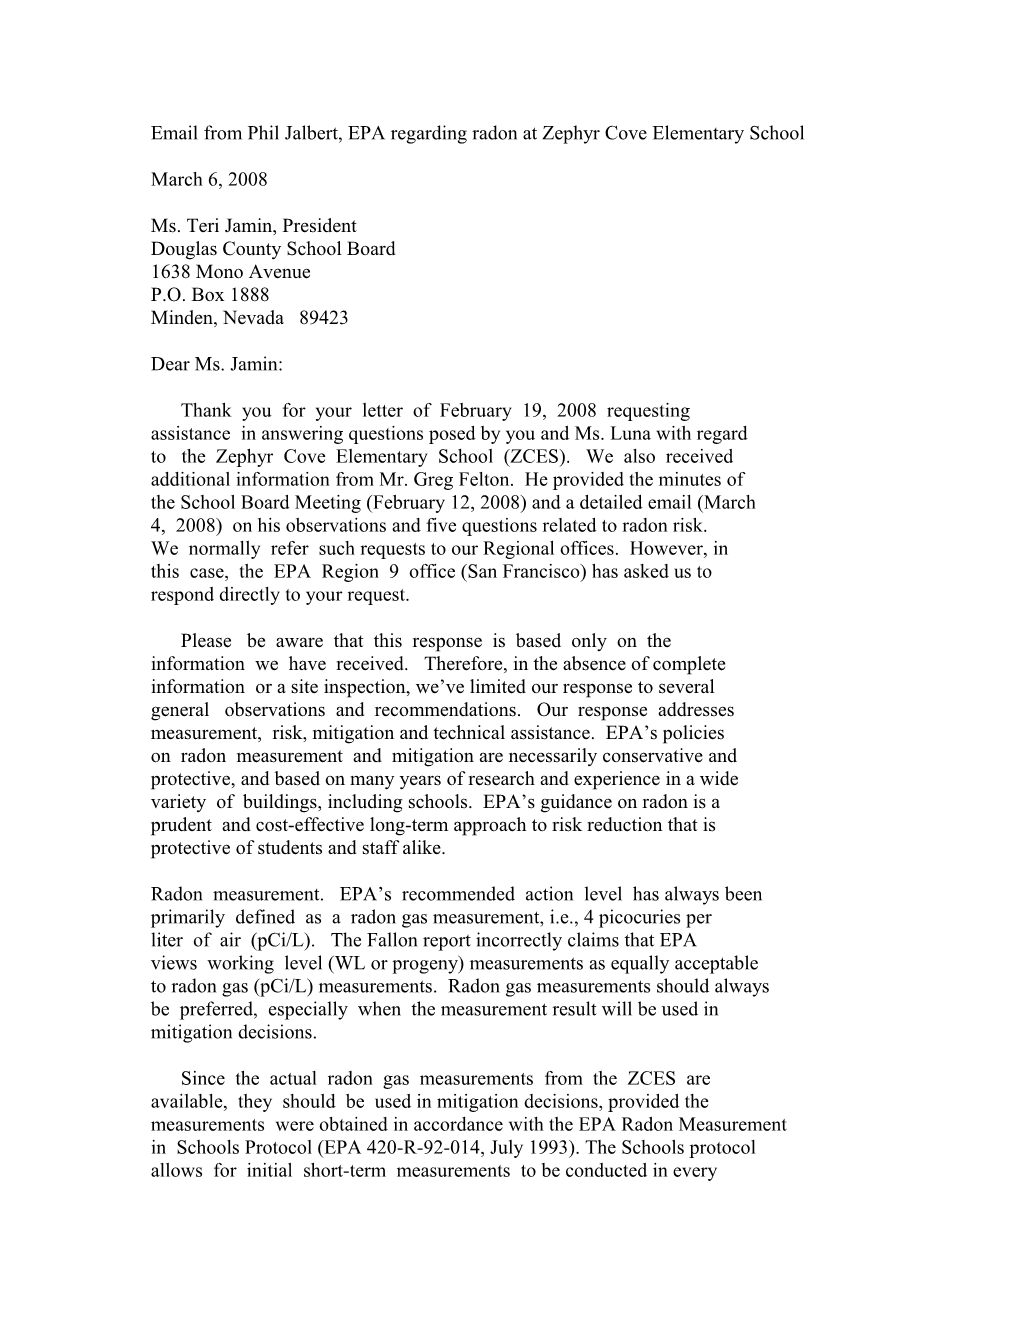 Email from Phil Jalbert, EPA Regarding Radon at Zephyr Cove Elementary School